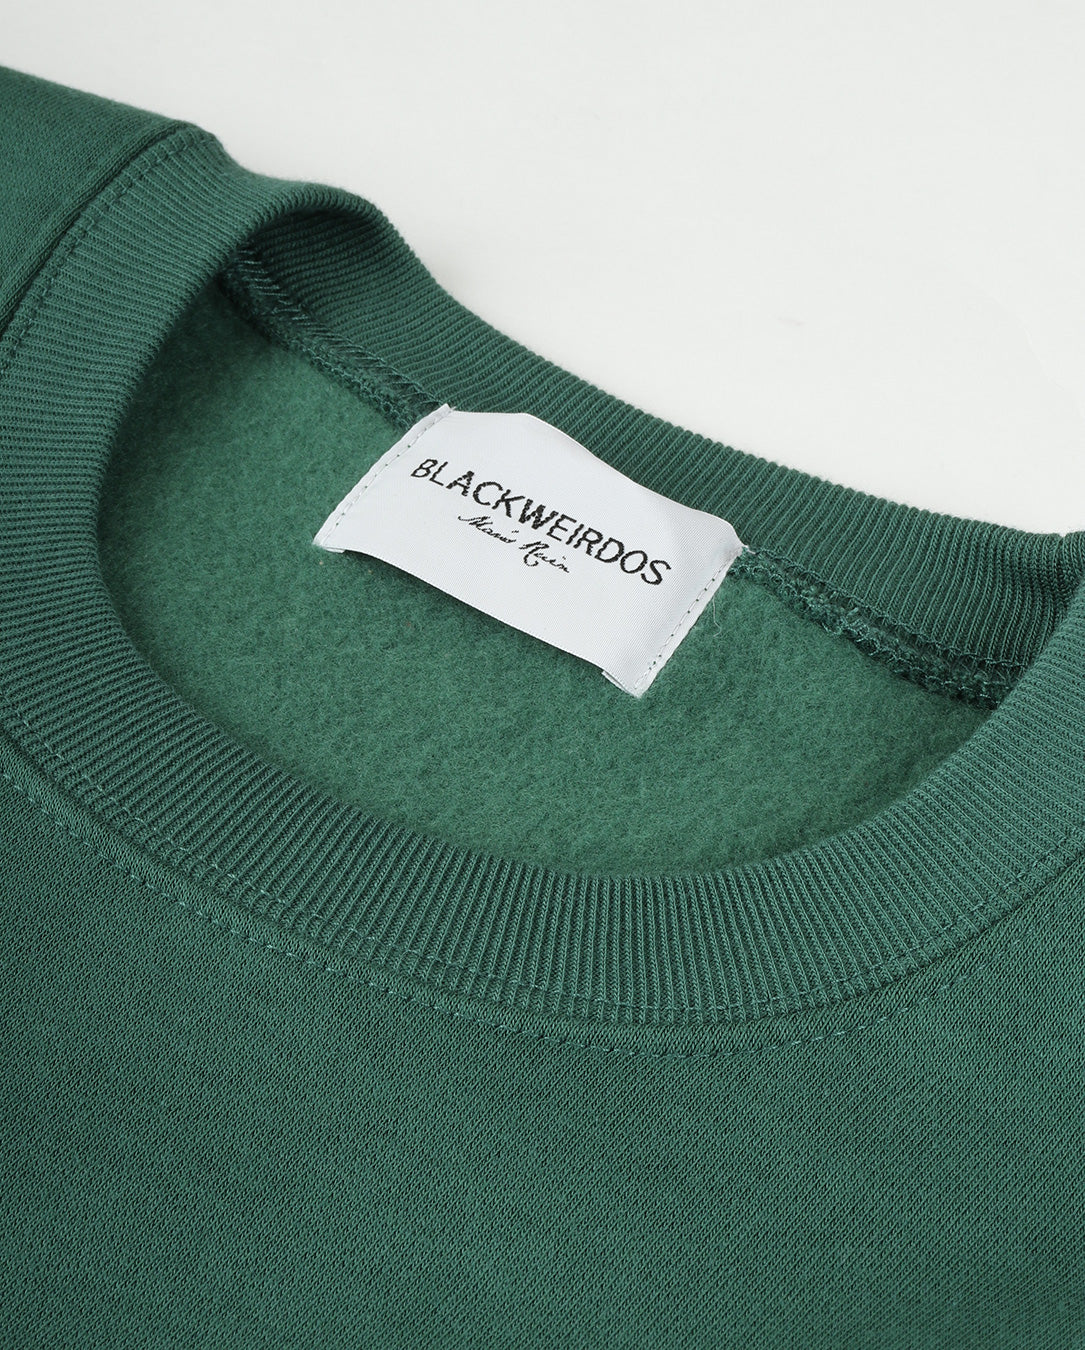 Crewneck Sweatshirt green